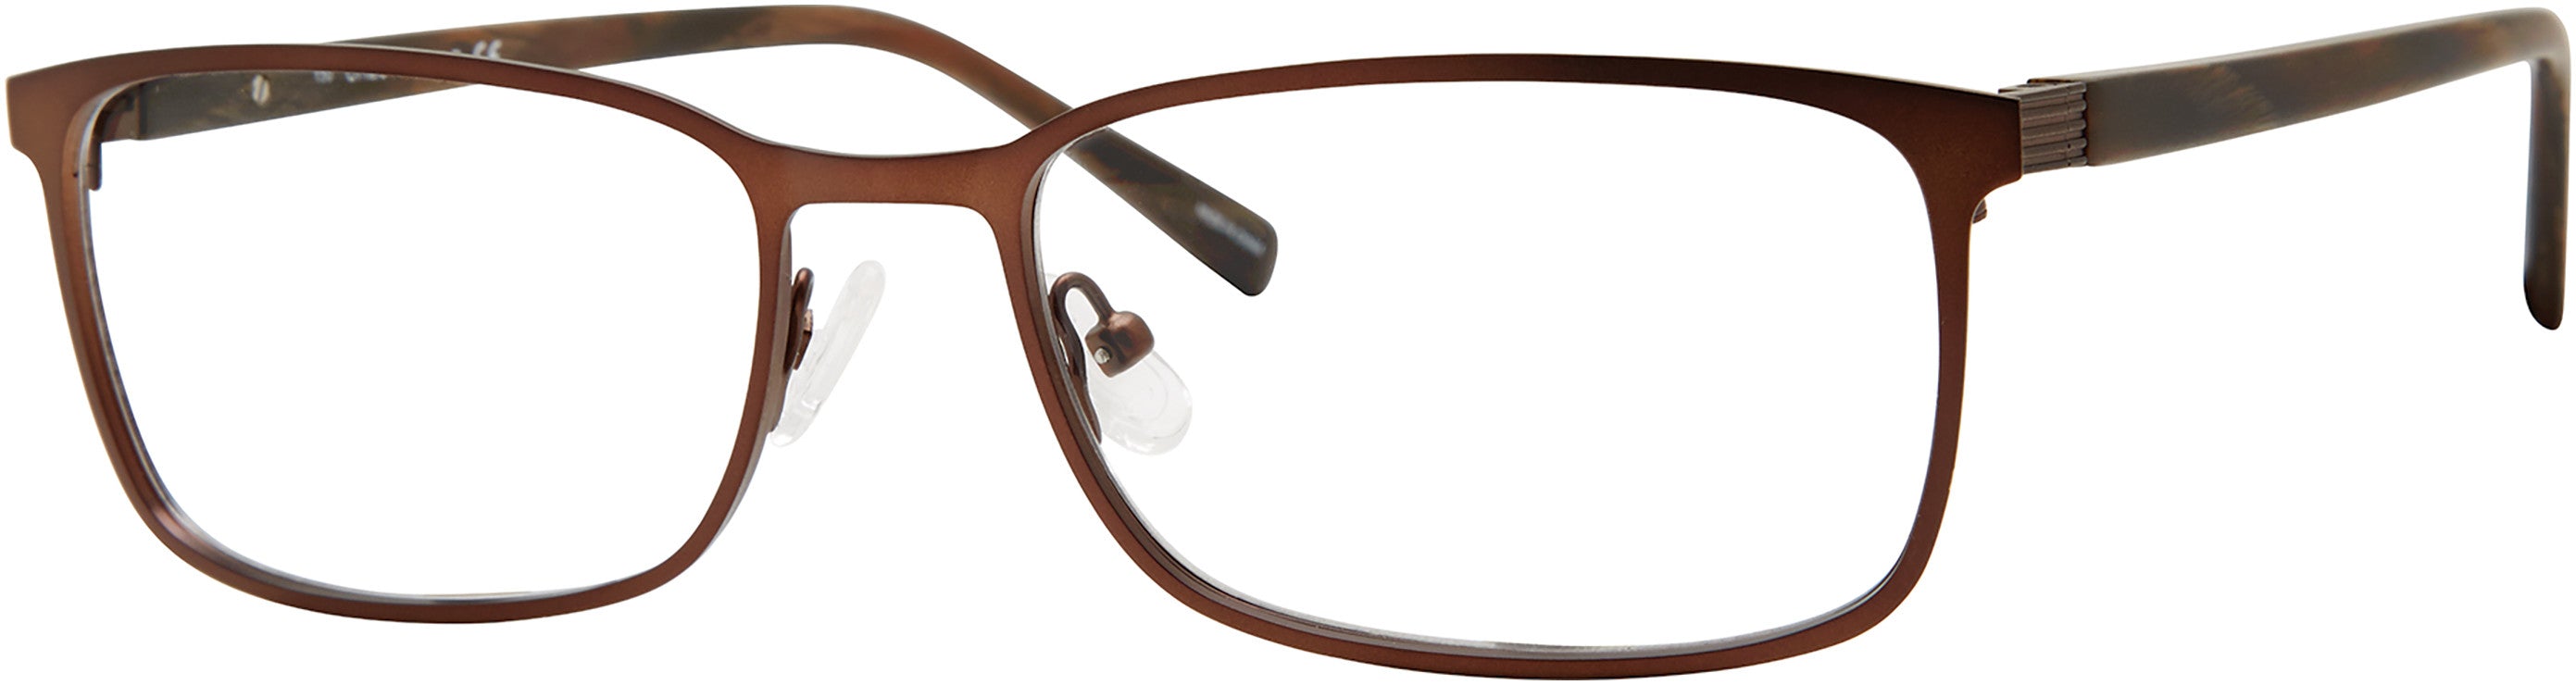  Chesterfield 71XL Rectangular Eyeglasses 04IN-04IN  Matte Brown (00 Demo Lens)